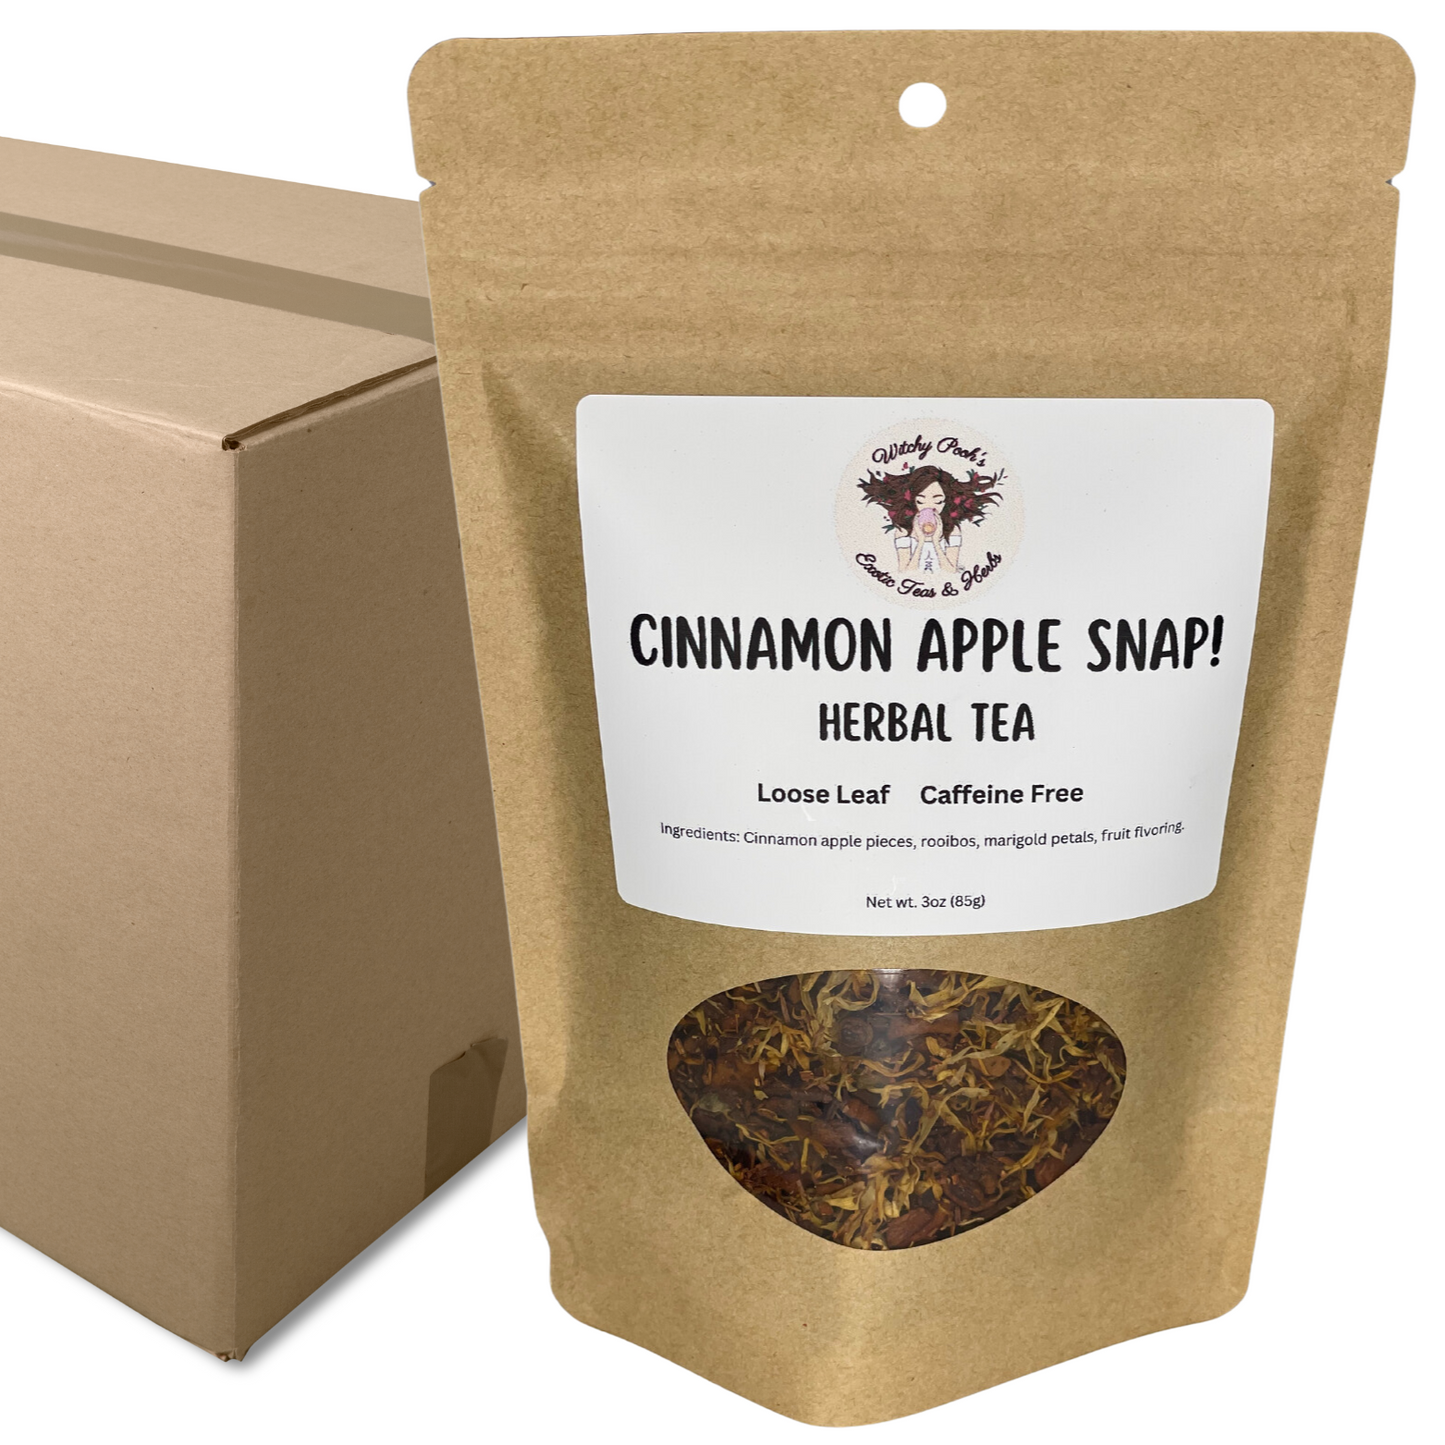 Witchy Pooh's Cinnamon Apple Snap! Loose Leaf Apple Fruit Rooibos Herbal Tea, Caffeine Free